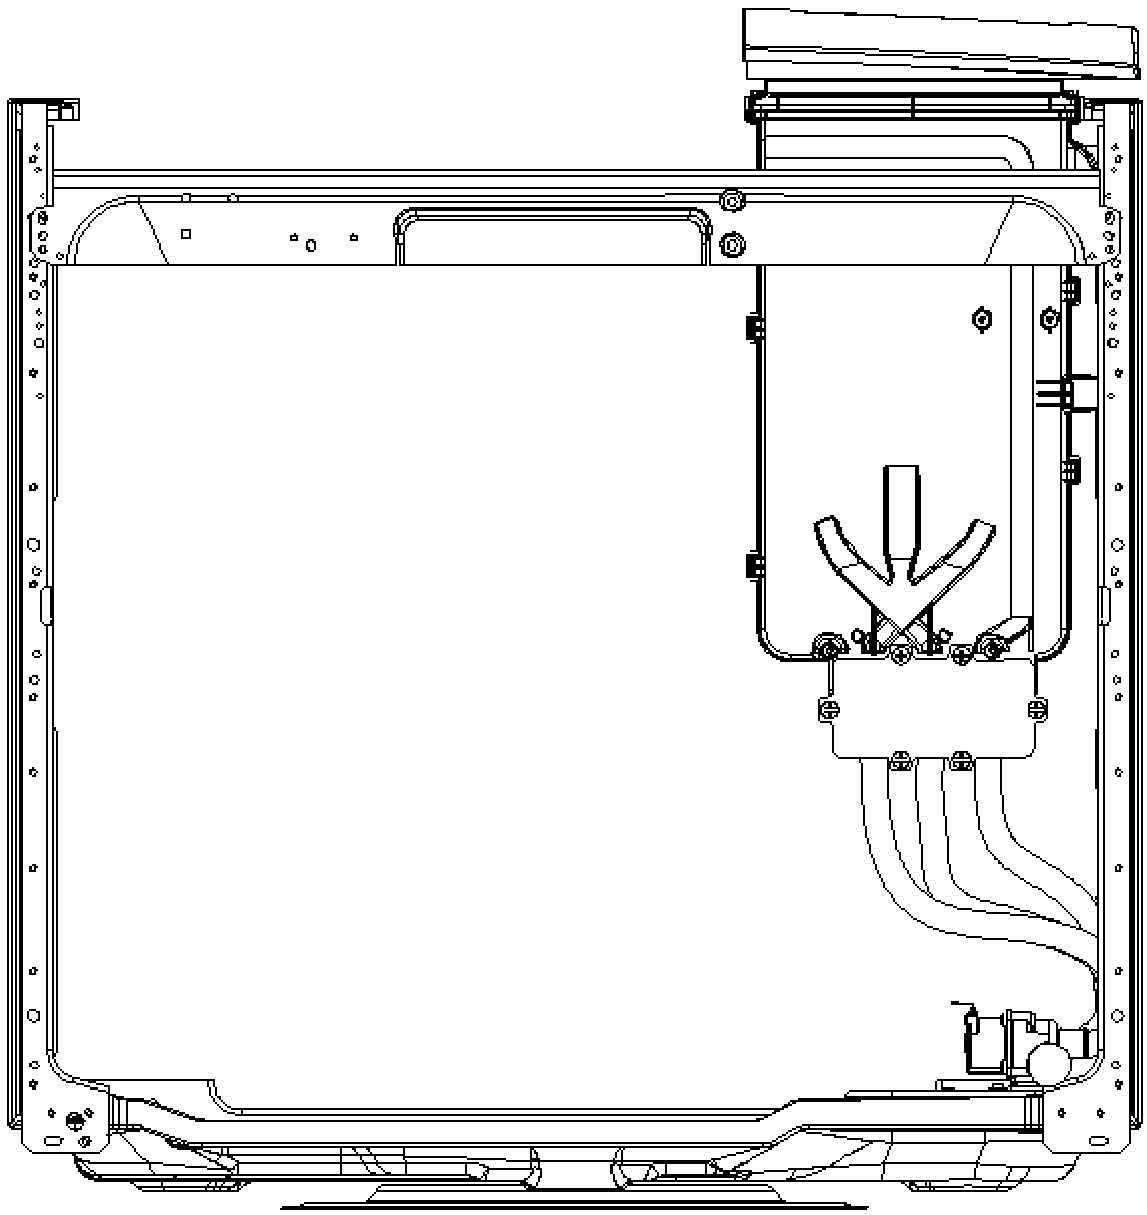 Water injection tank and washing machine